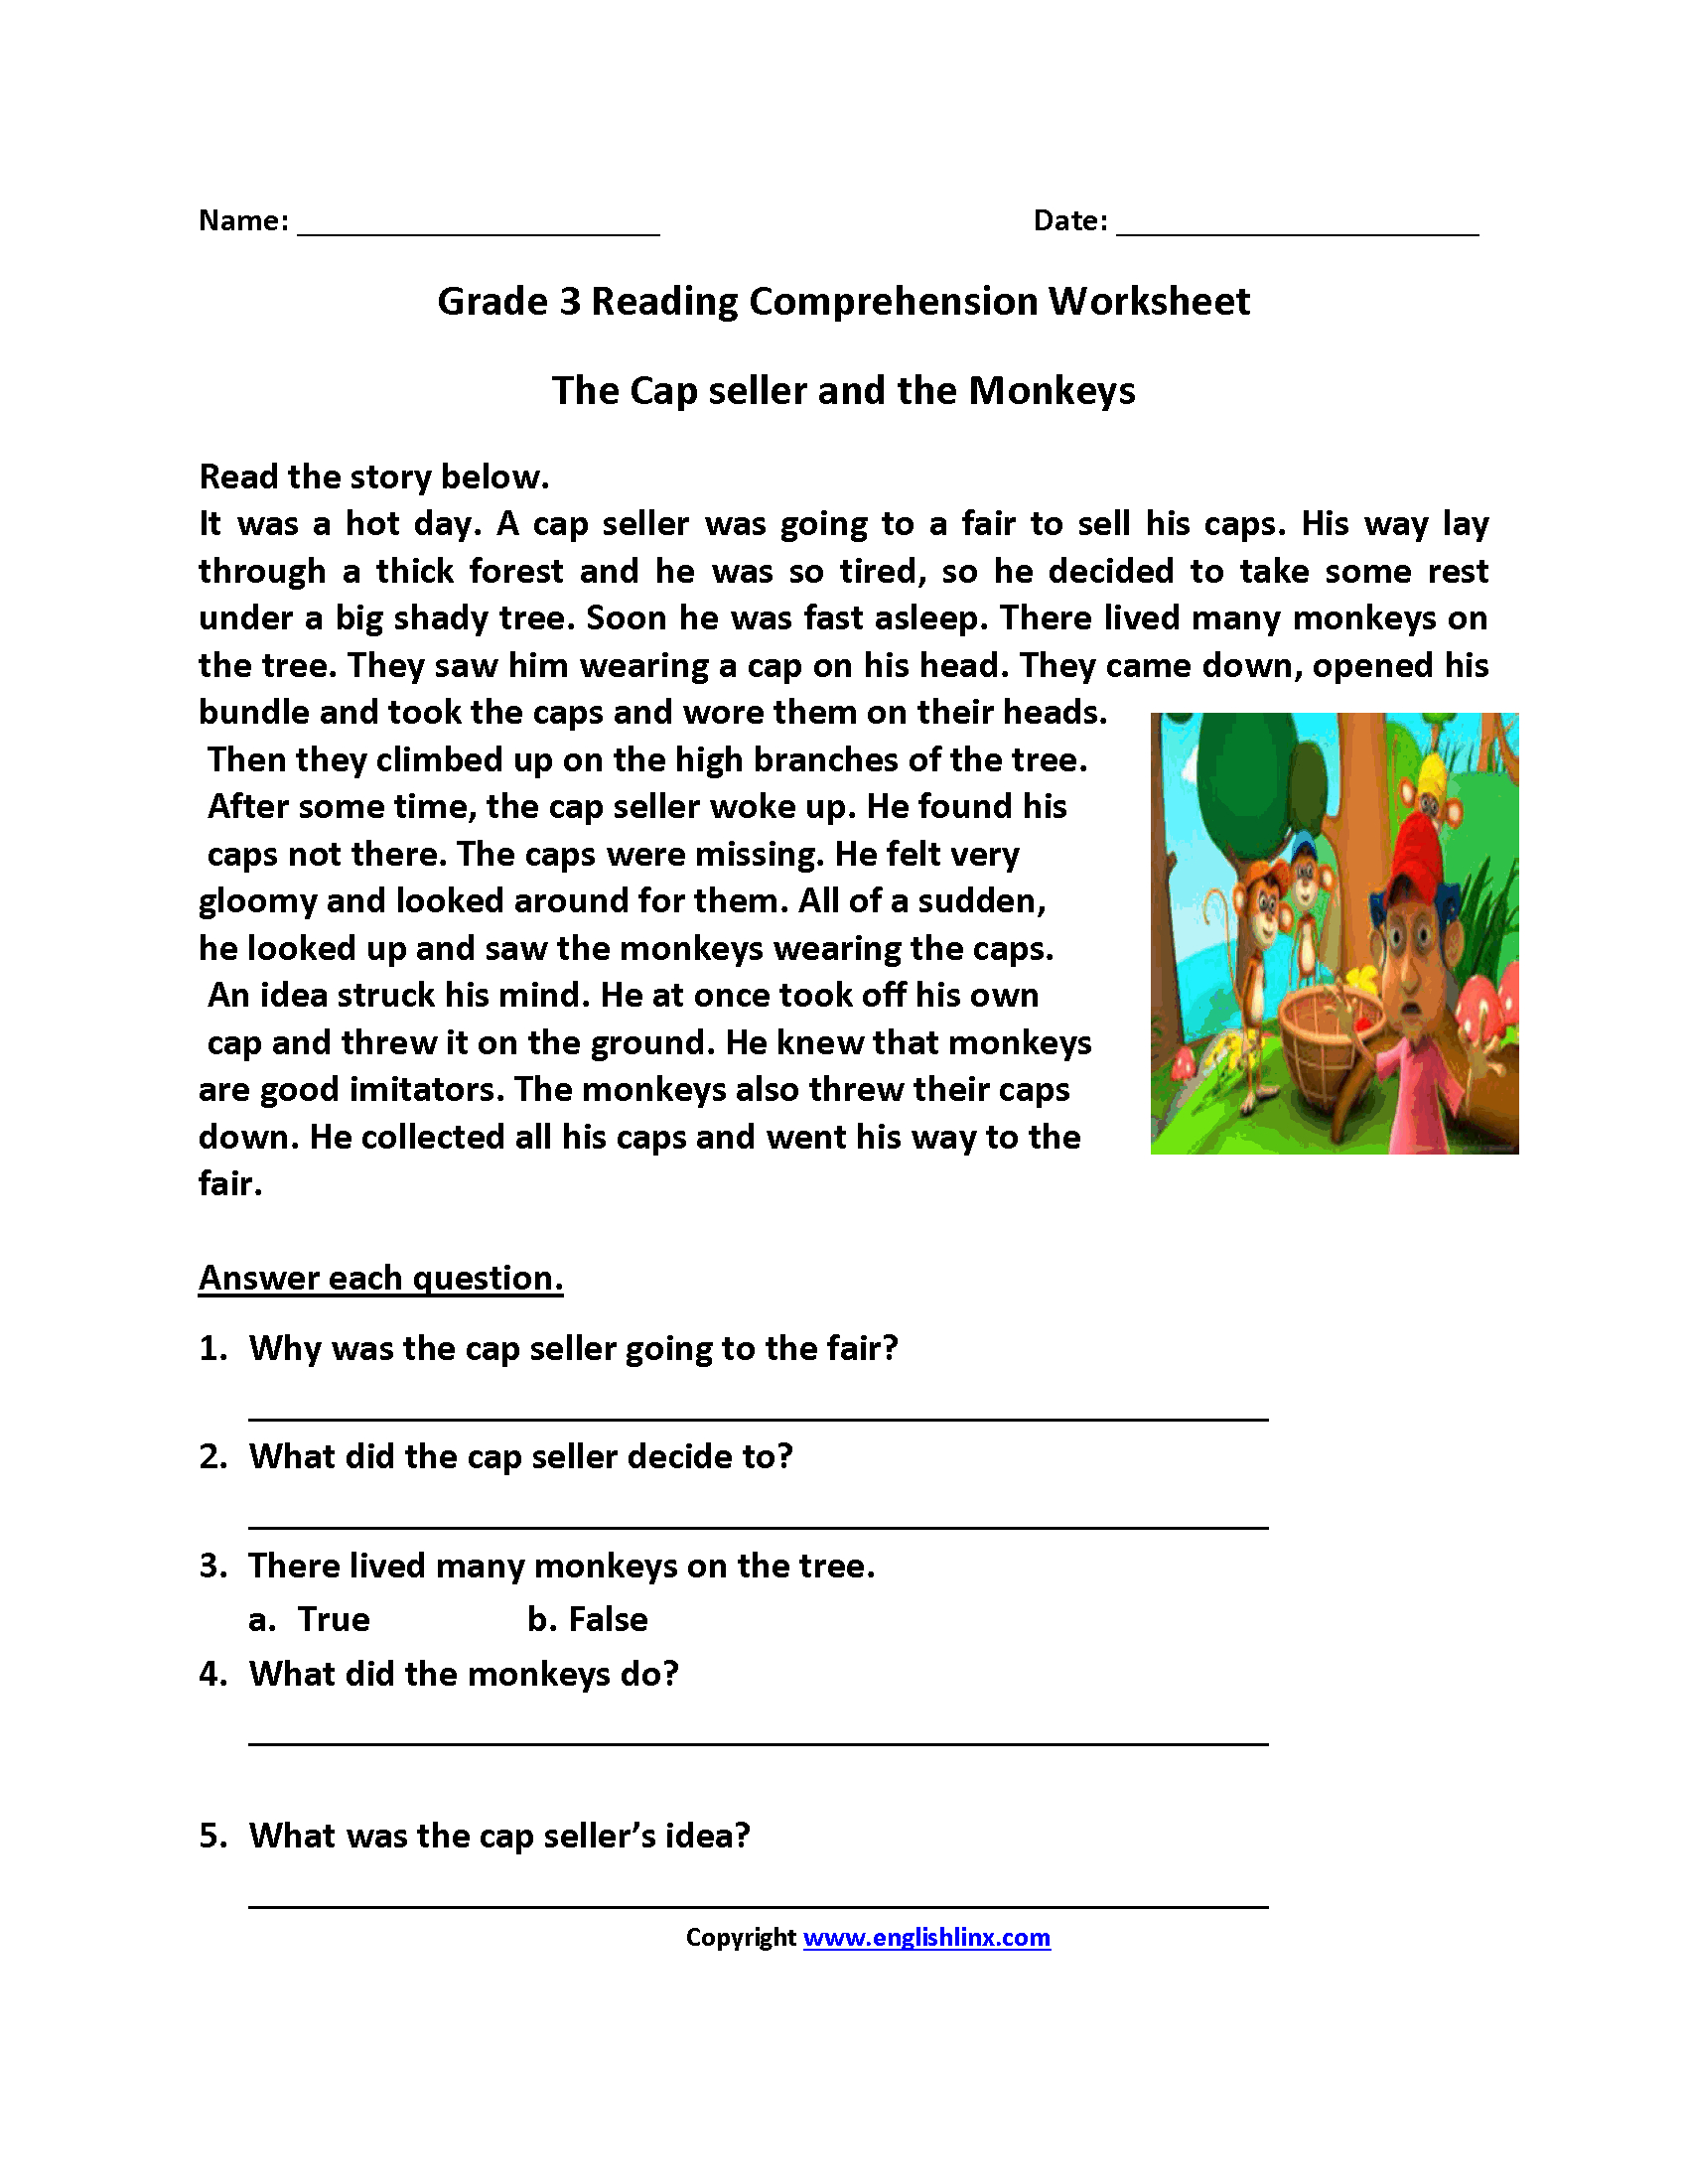 Free Reading Comprehension Worksheets For 3Rd Grade db excel com